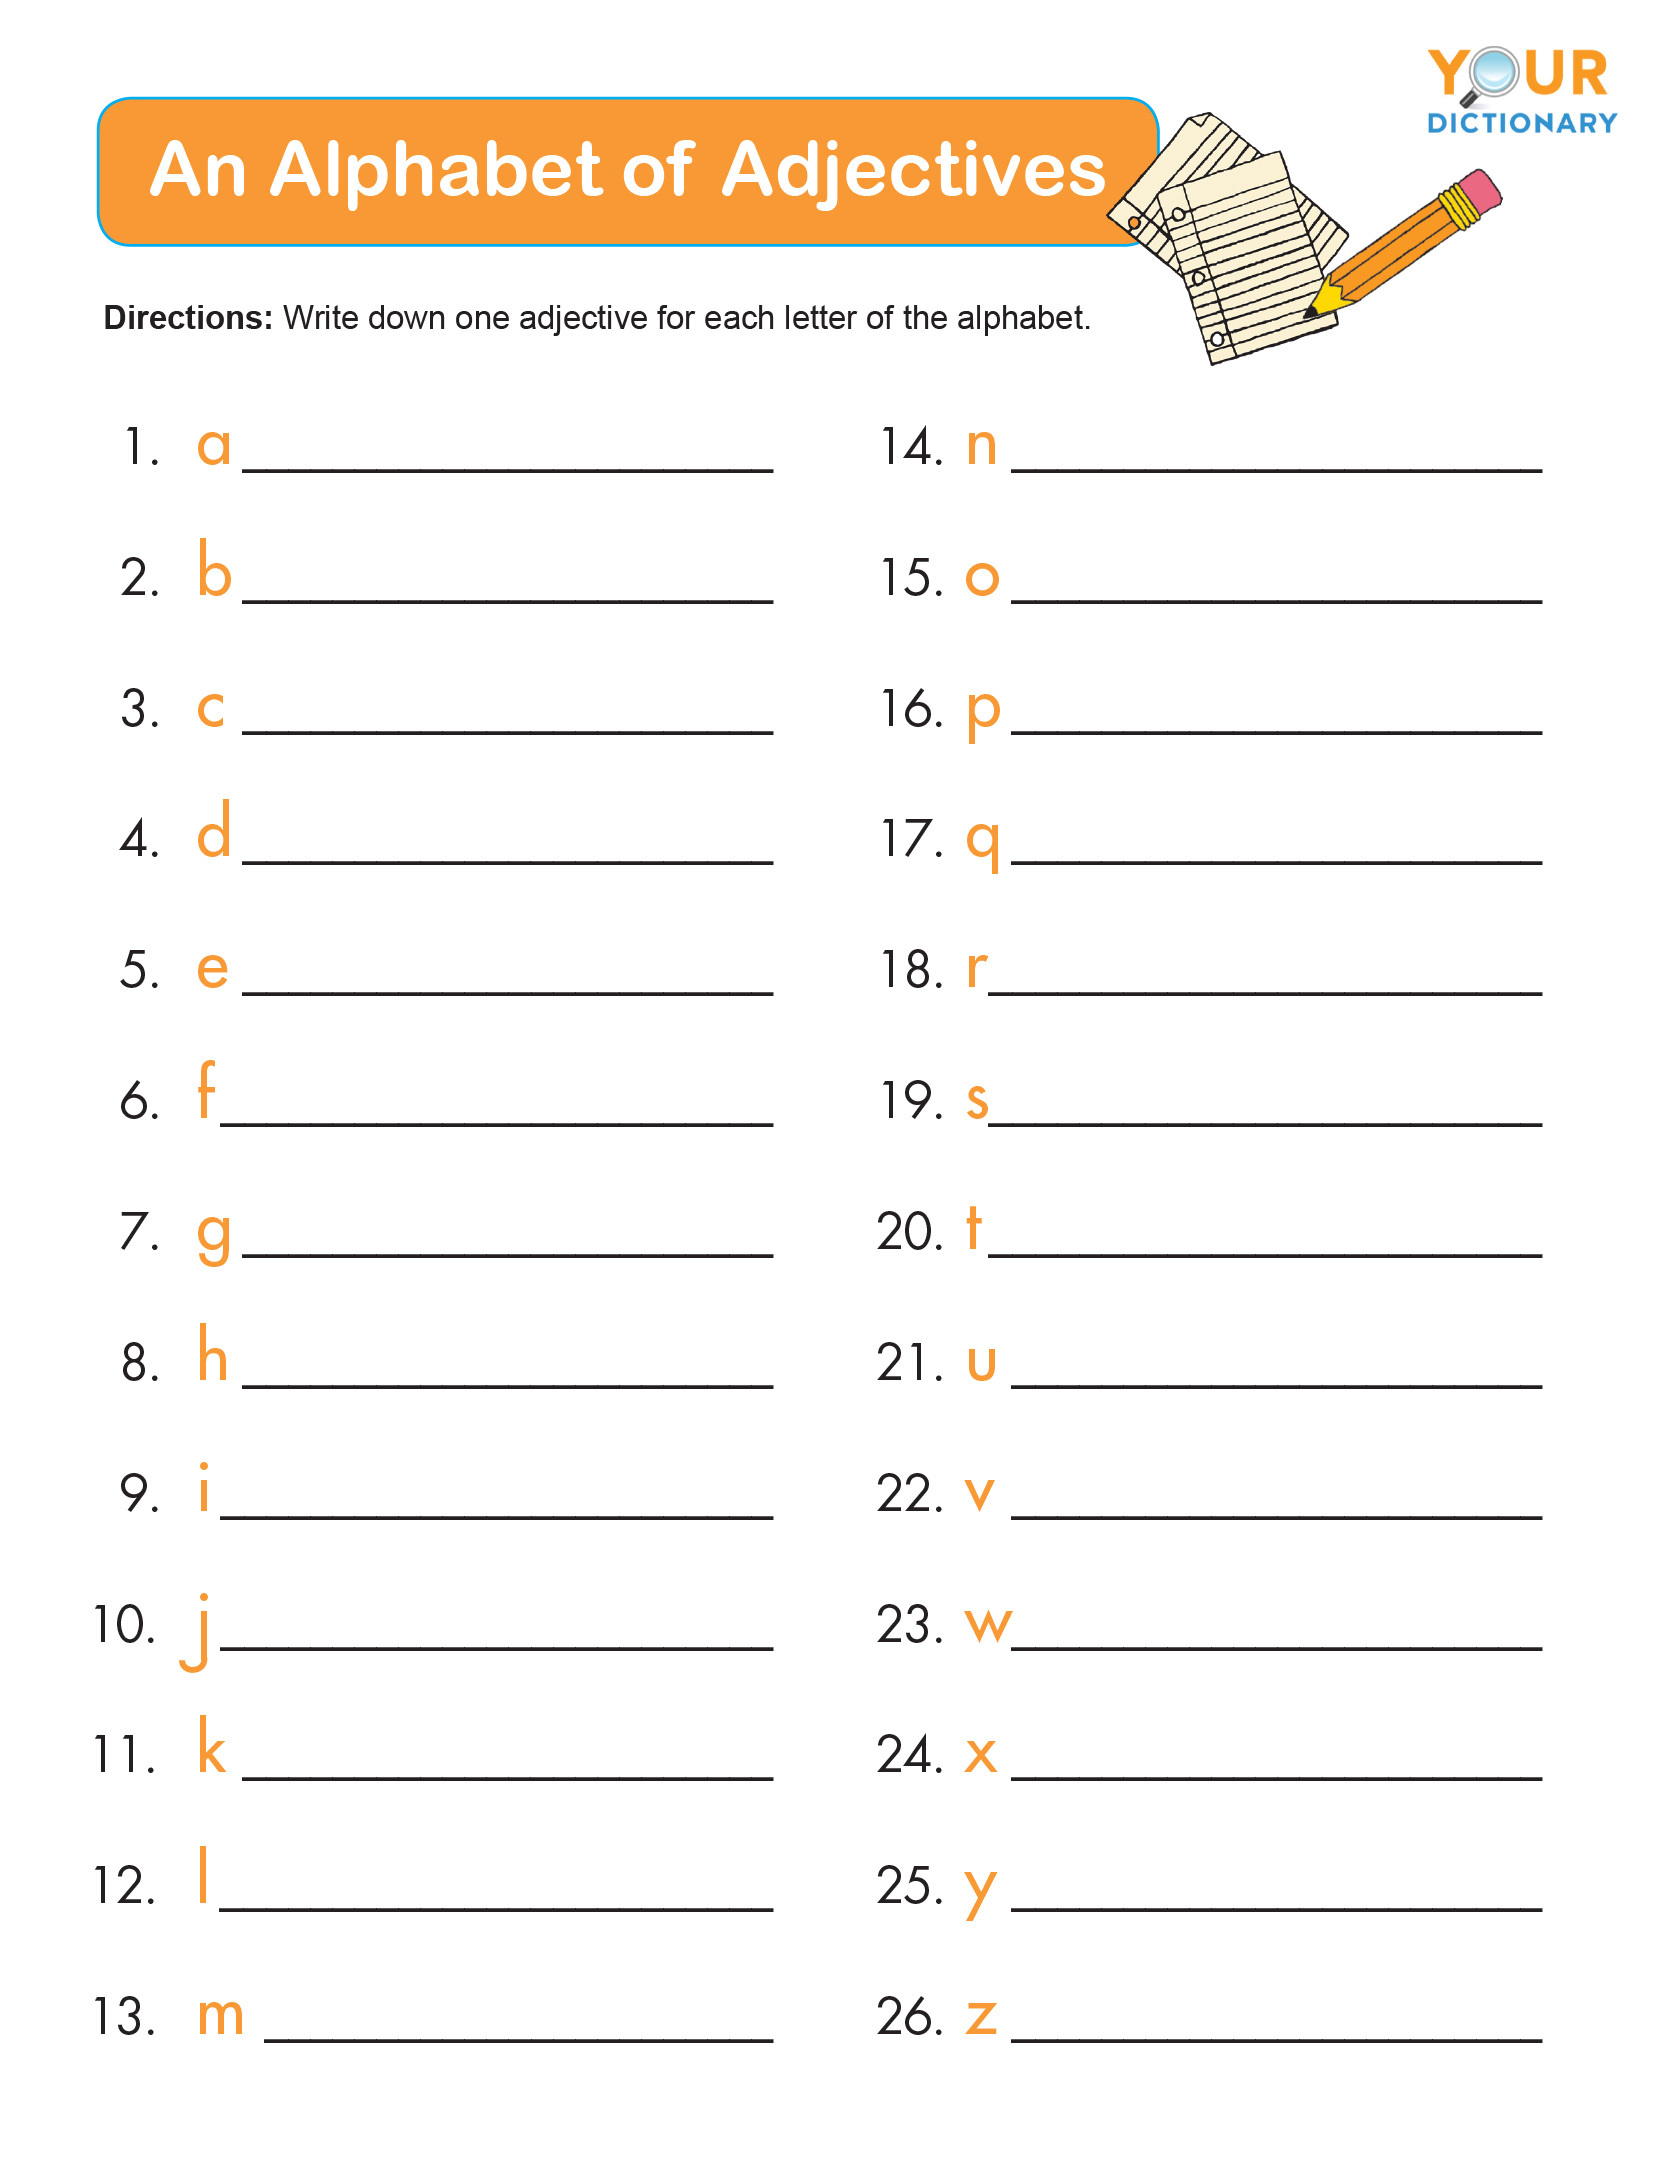 Proper Order Of Adjectives Worksheets K5 Learning Adjective Worksheets For Elementary School